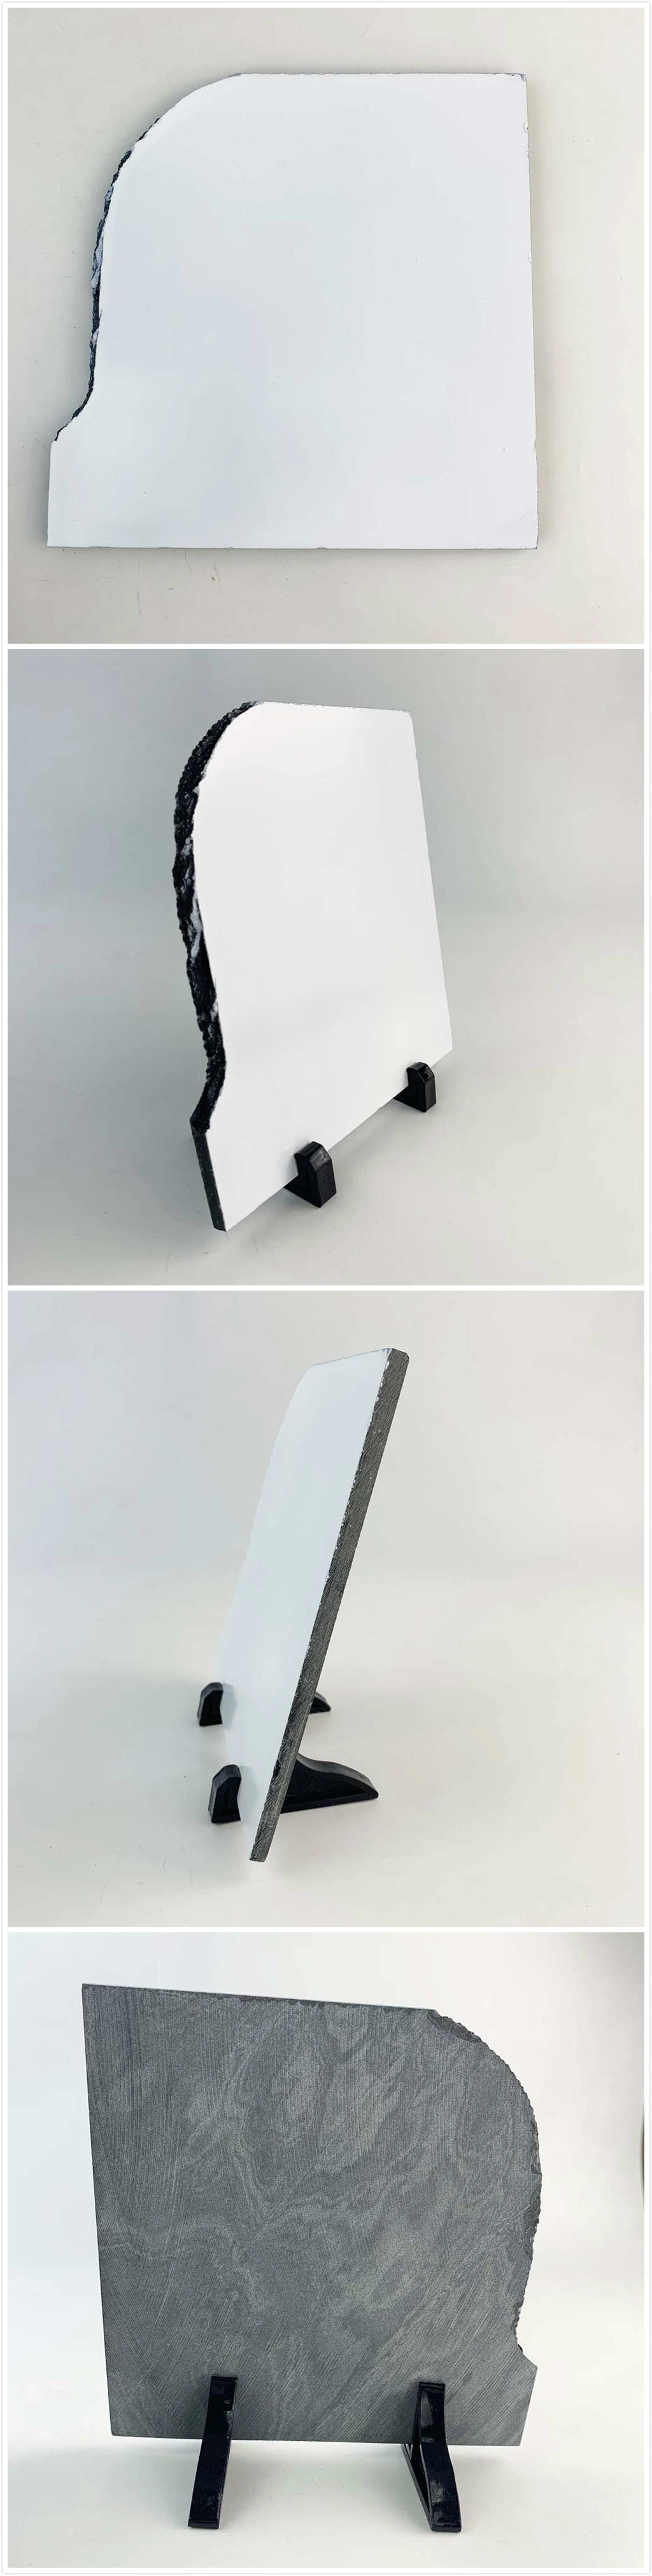 20*20cm Half Round Sublimation Blank Photo Slate Frame for Heat Transfer Printing Sh08